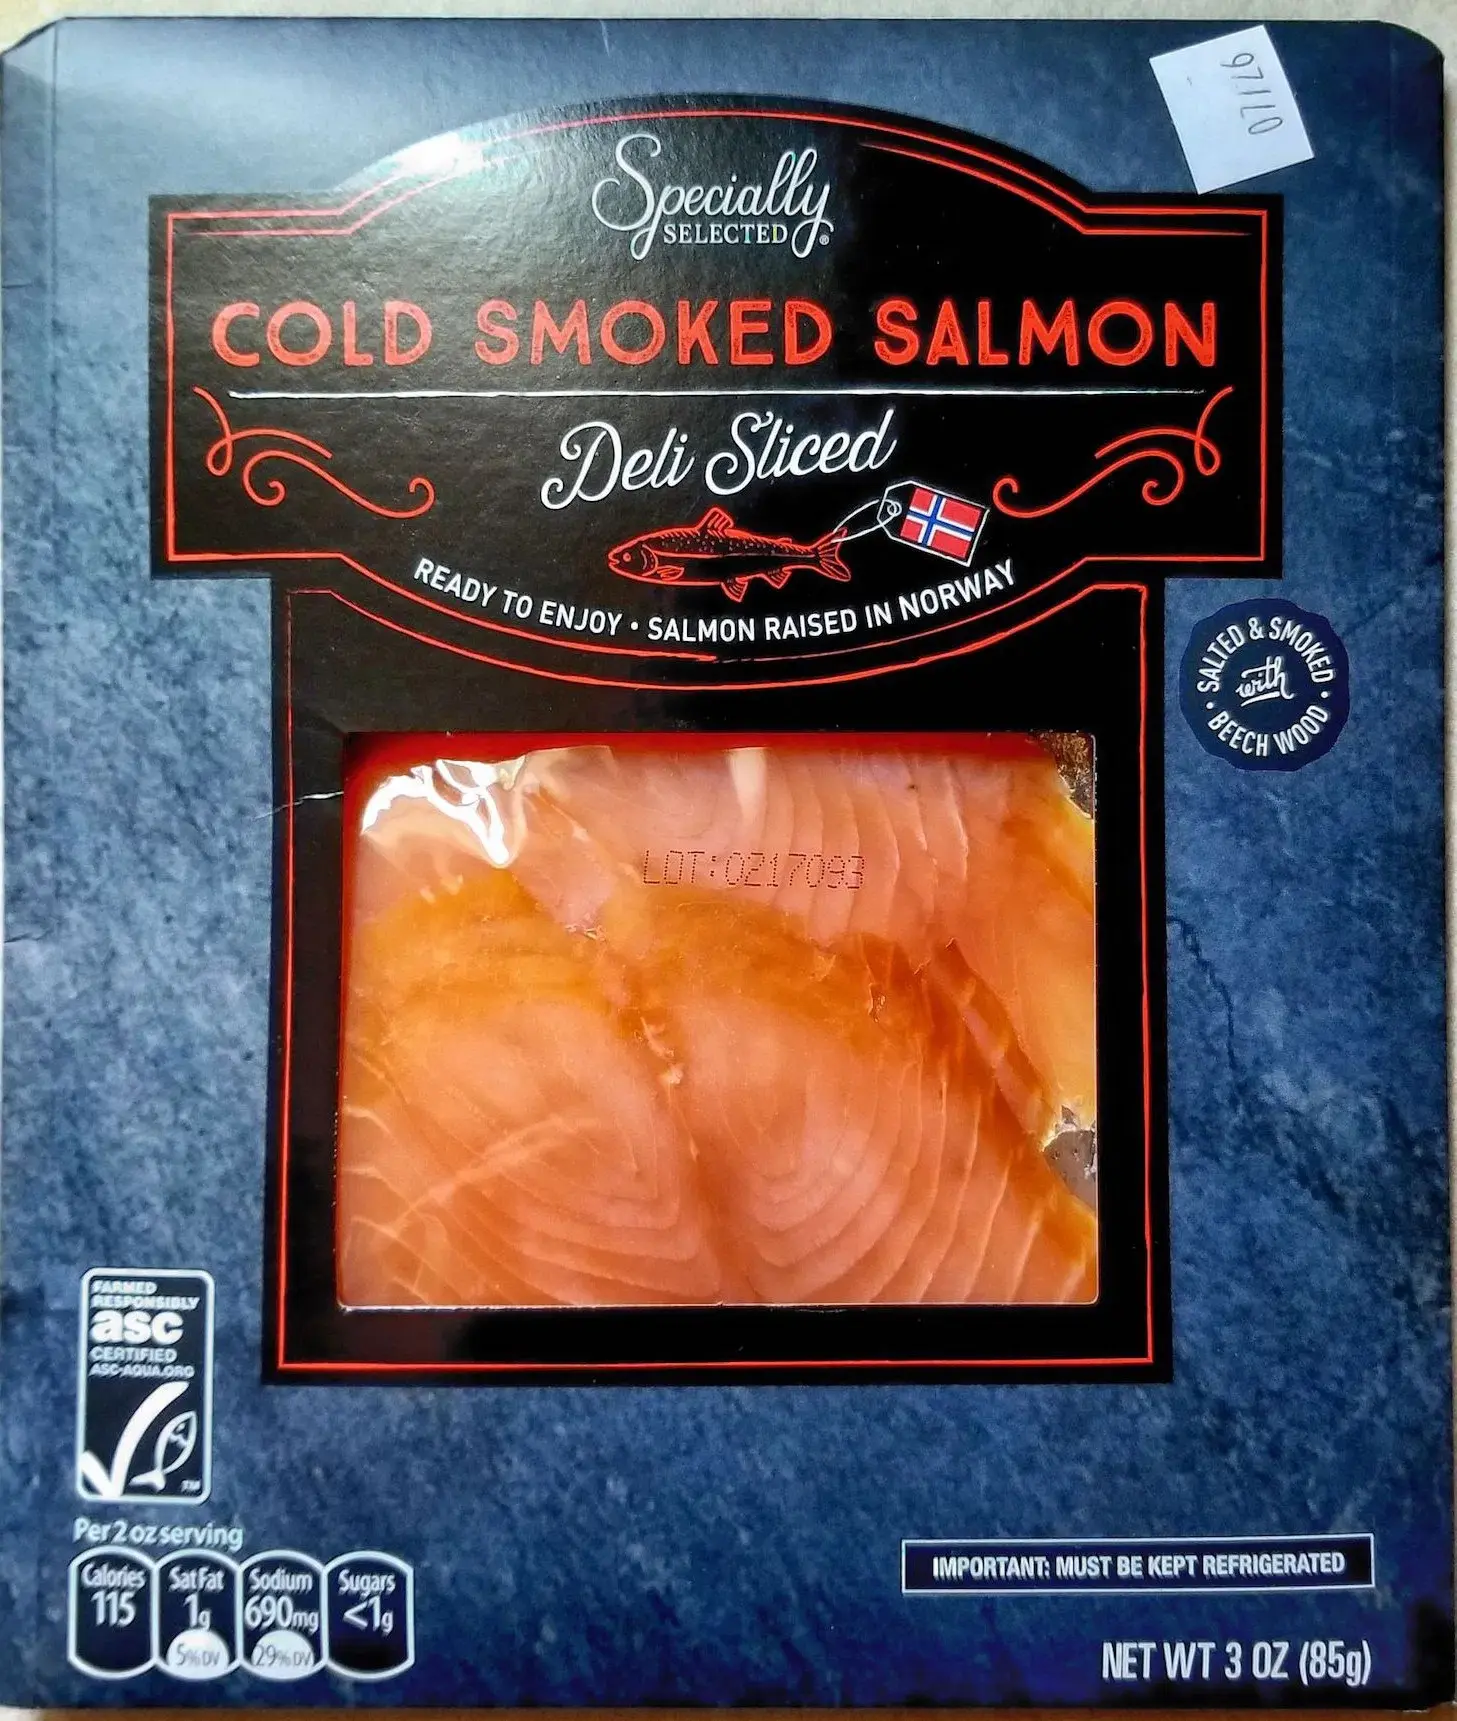 aldi smoked salmon calories - How many calories are in Aldi smoked salmon